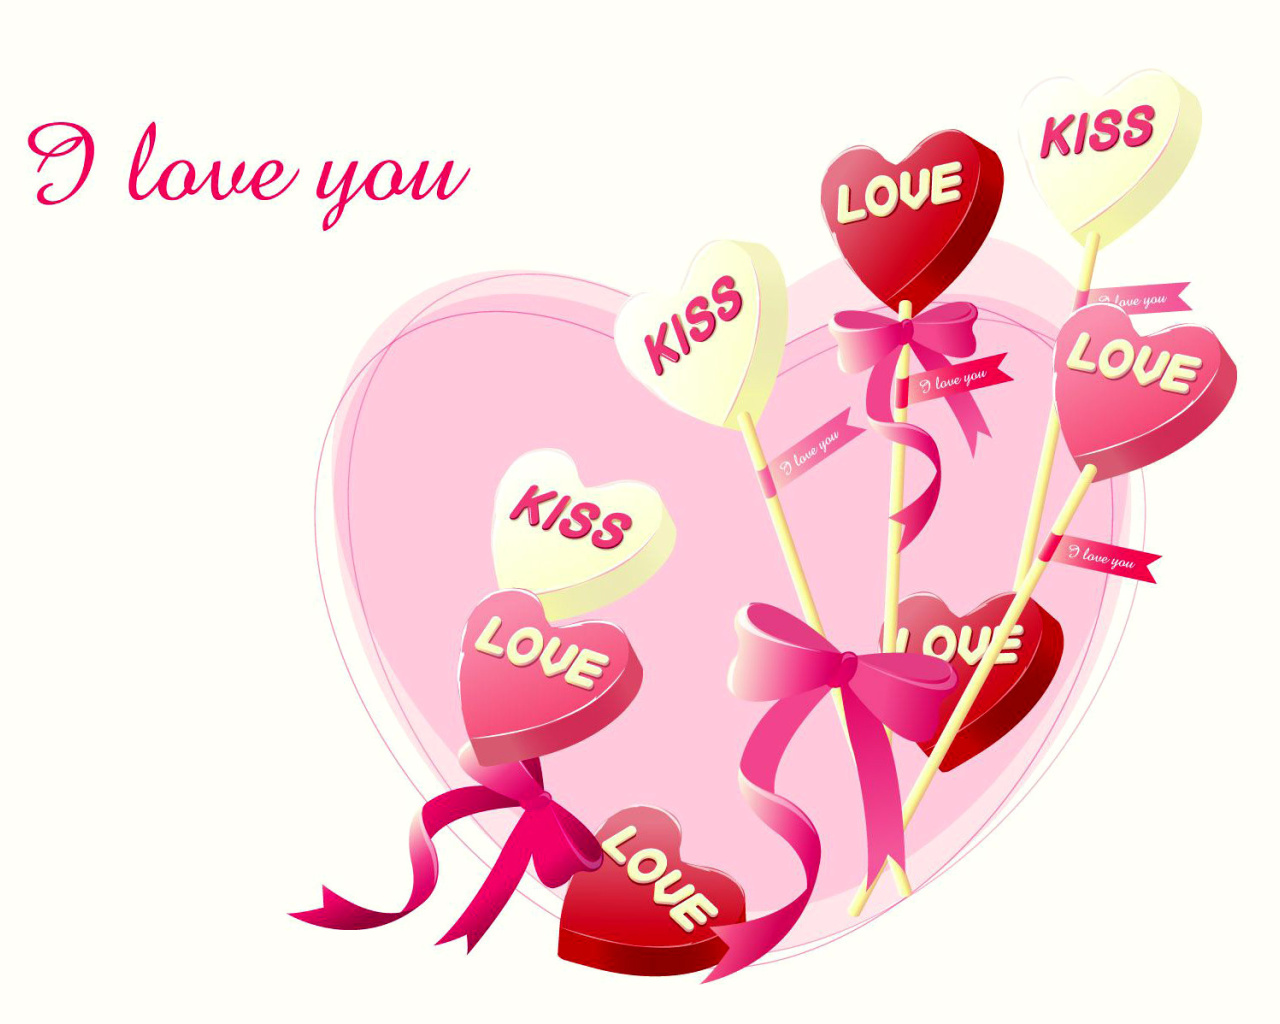 Das I Love You Balloons and Hearts Wallpaper 1280x1024